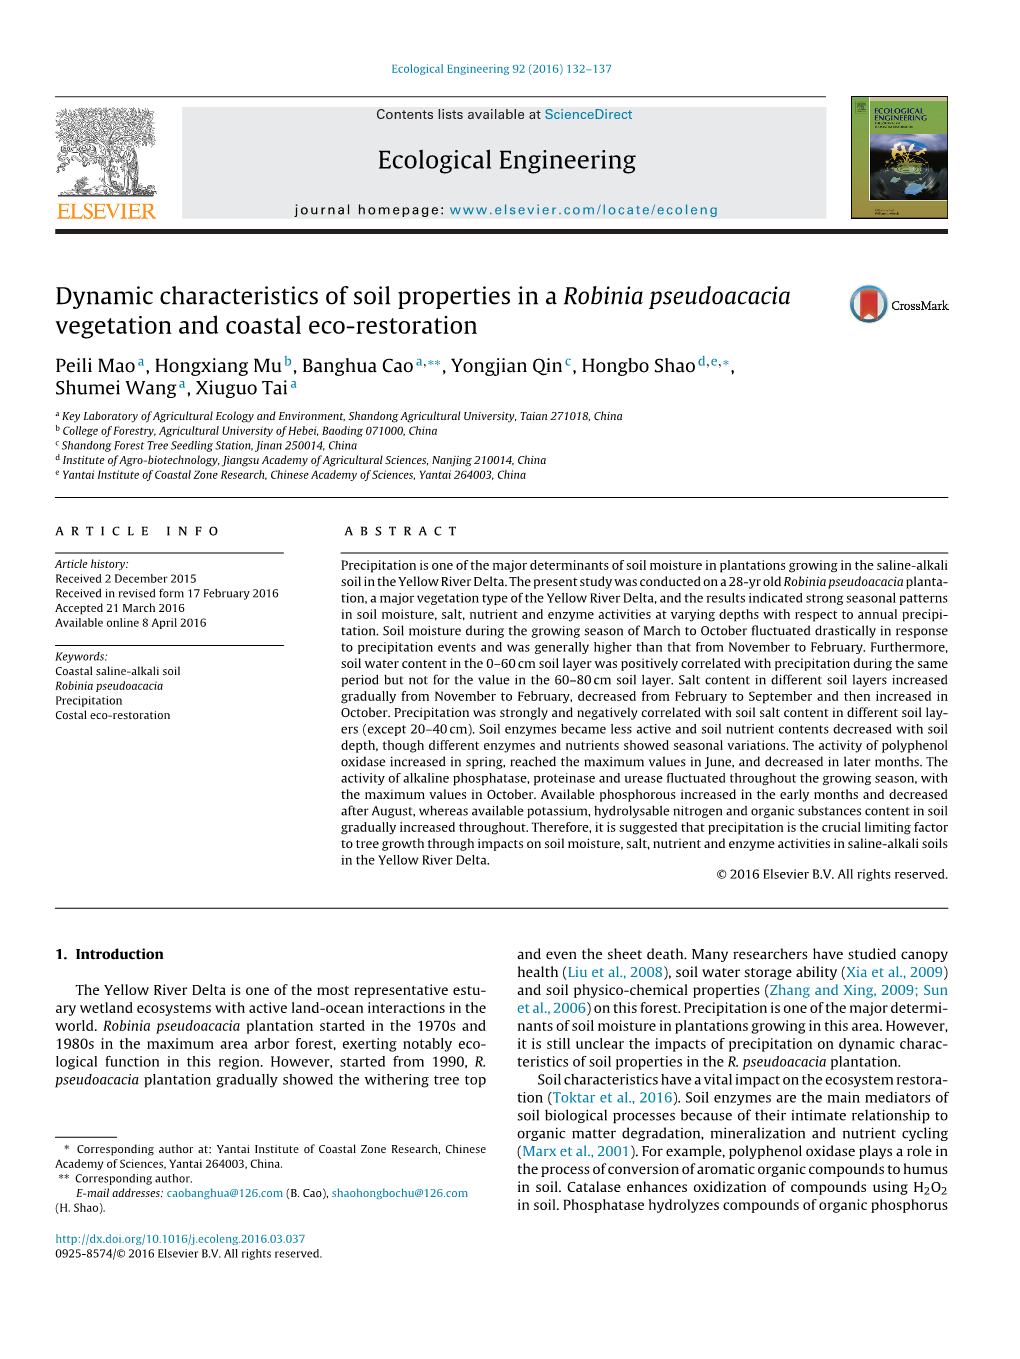 Dynamic Characteristics of Soil Properties in a Robinia Pseudoacacia